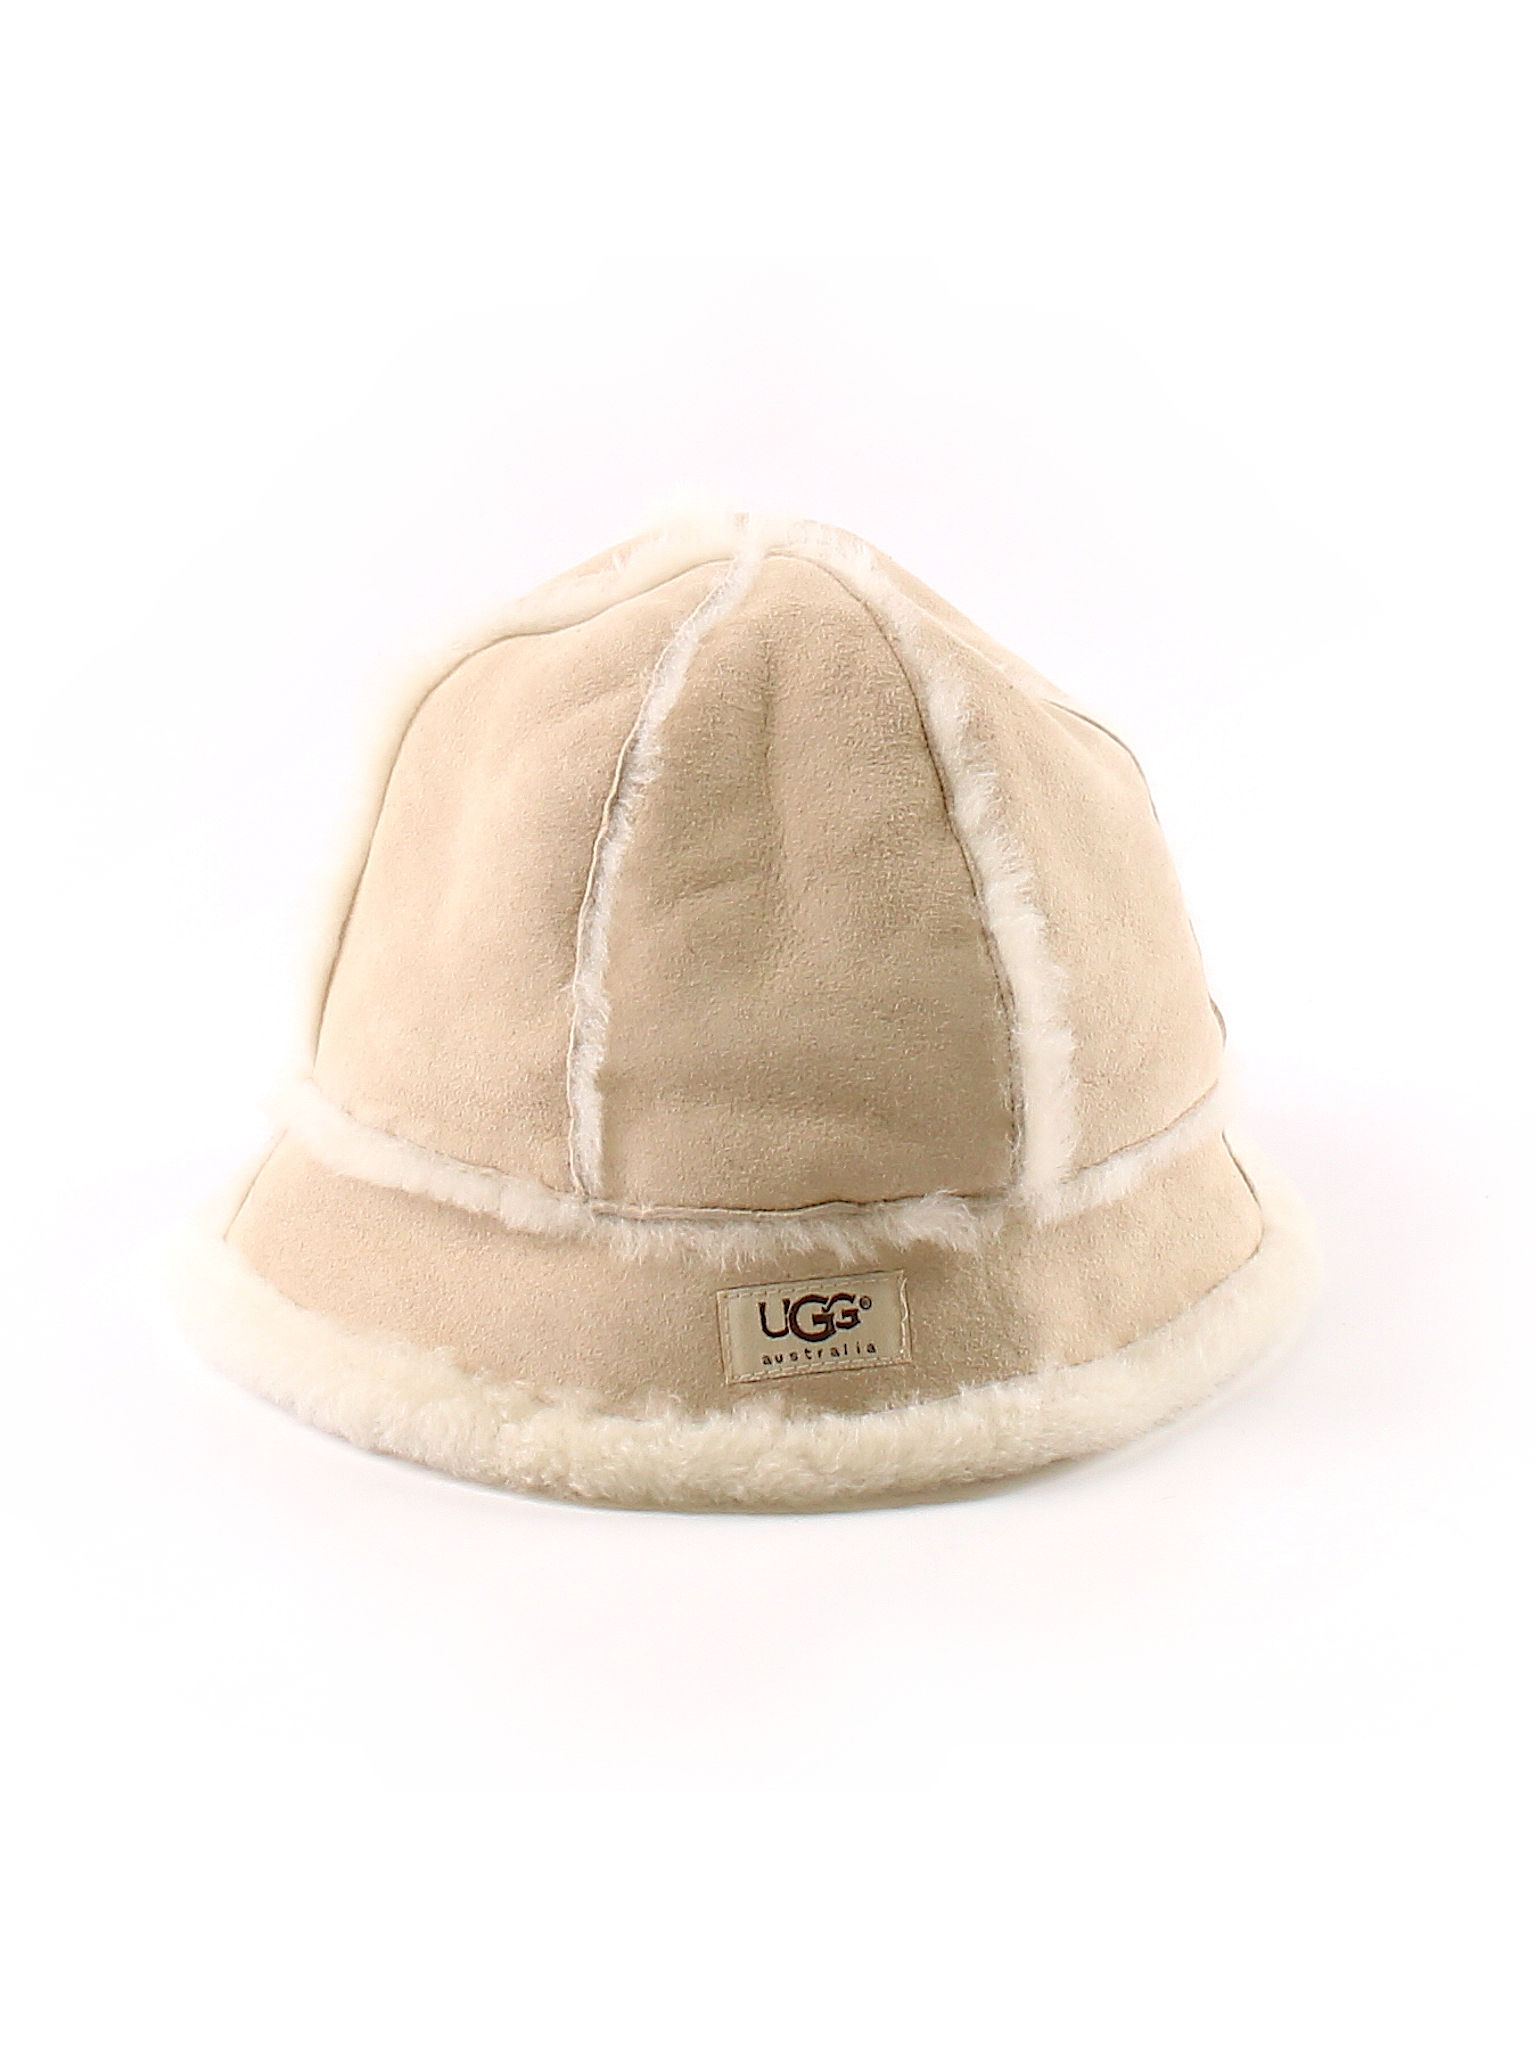 uggs winter hats